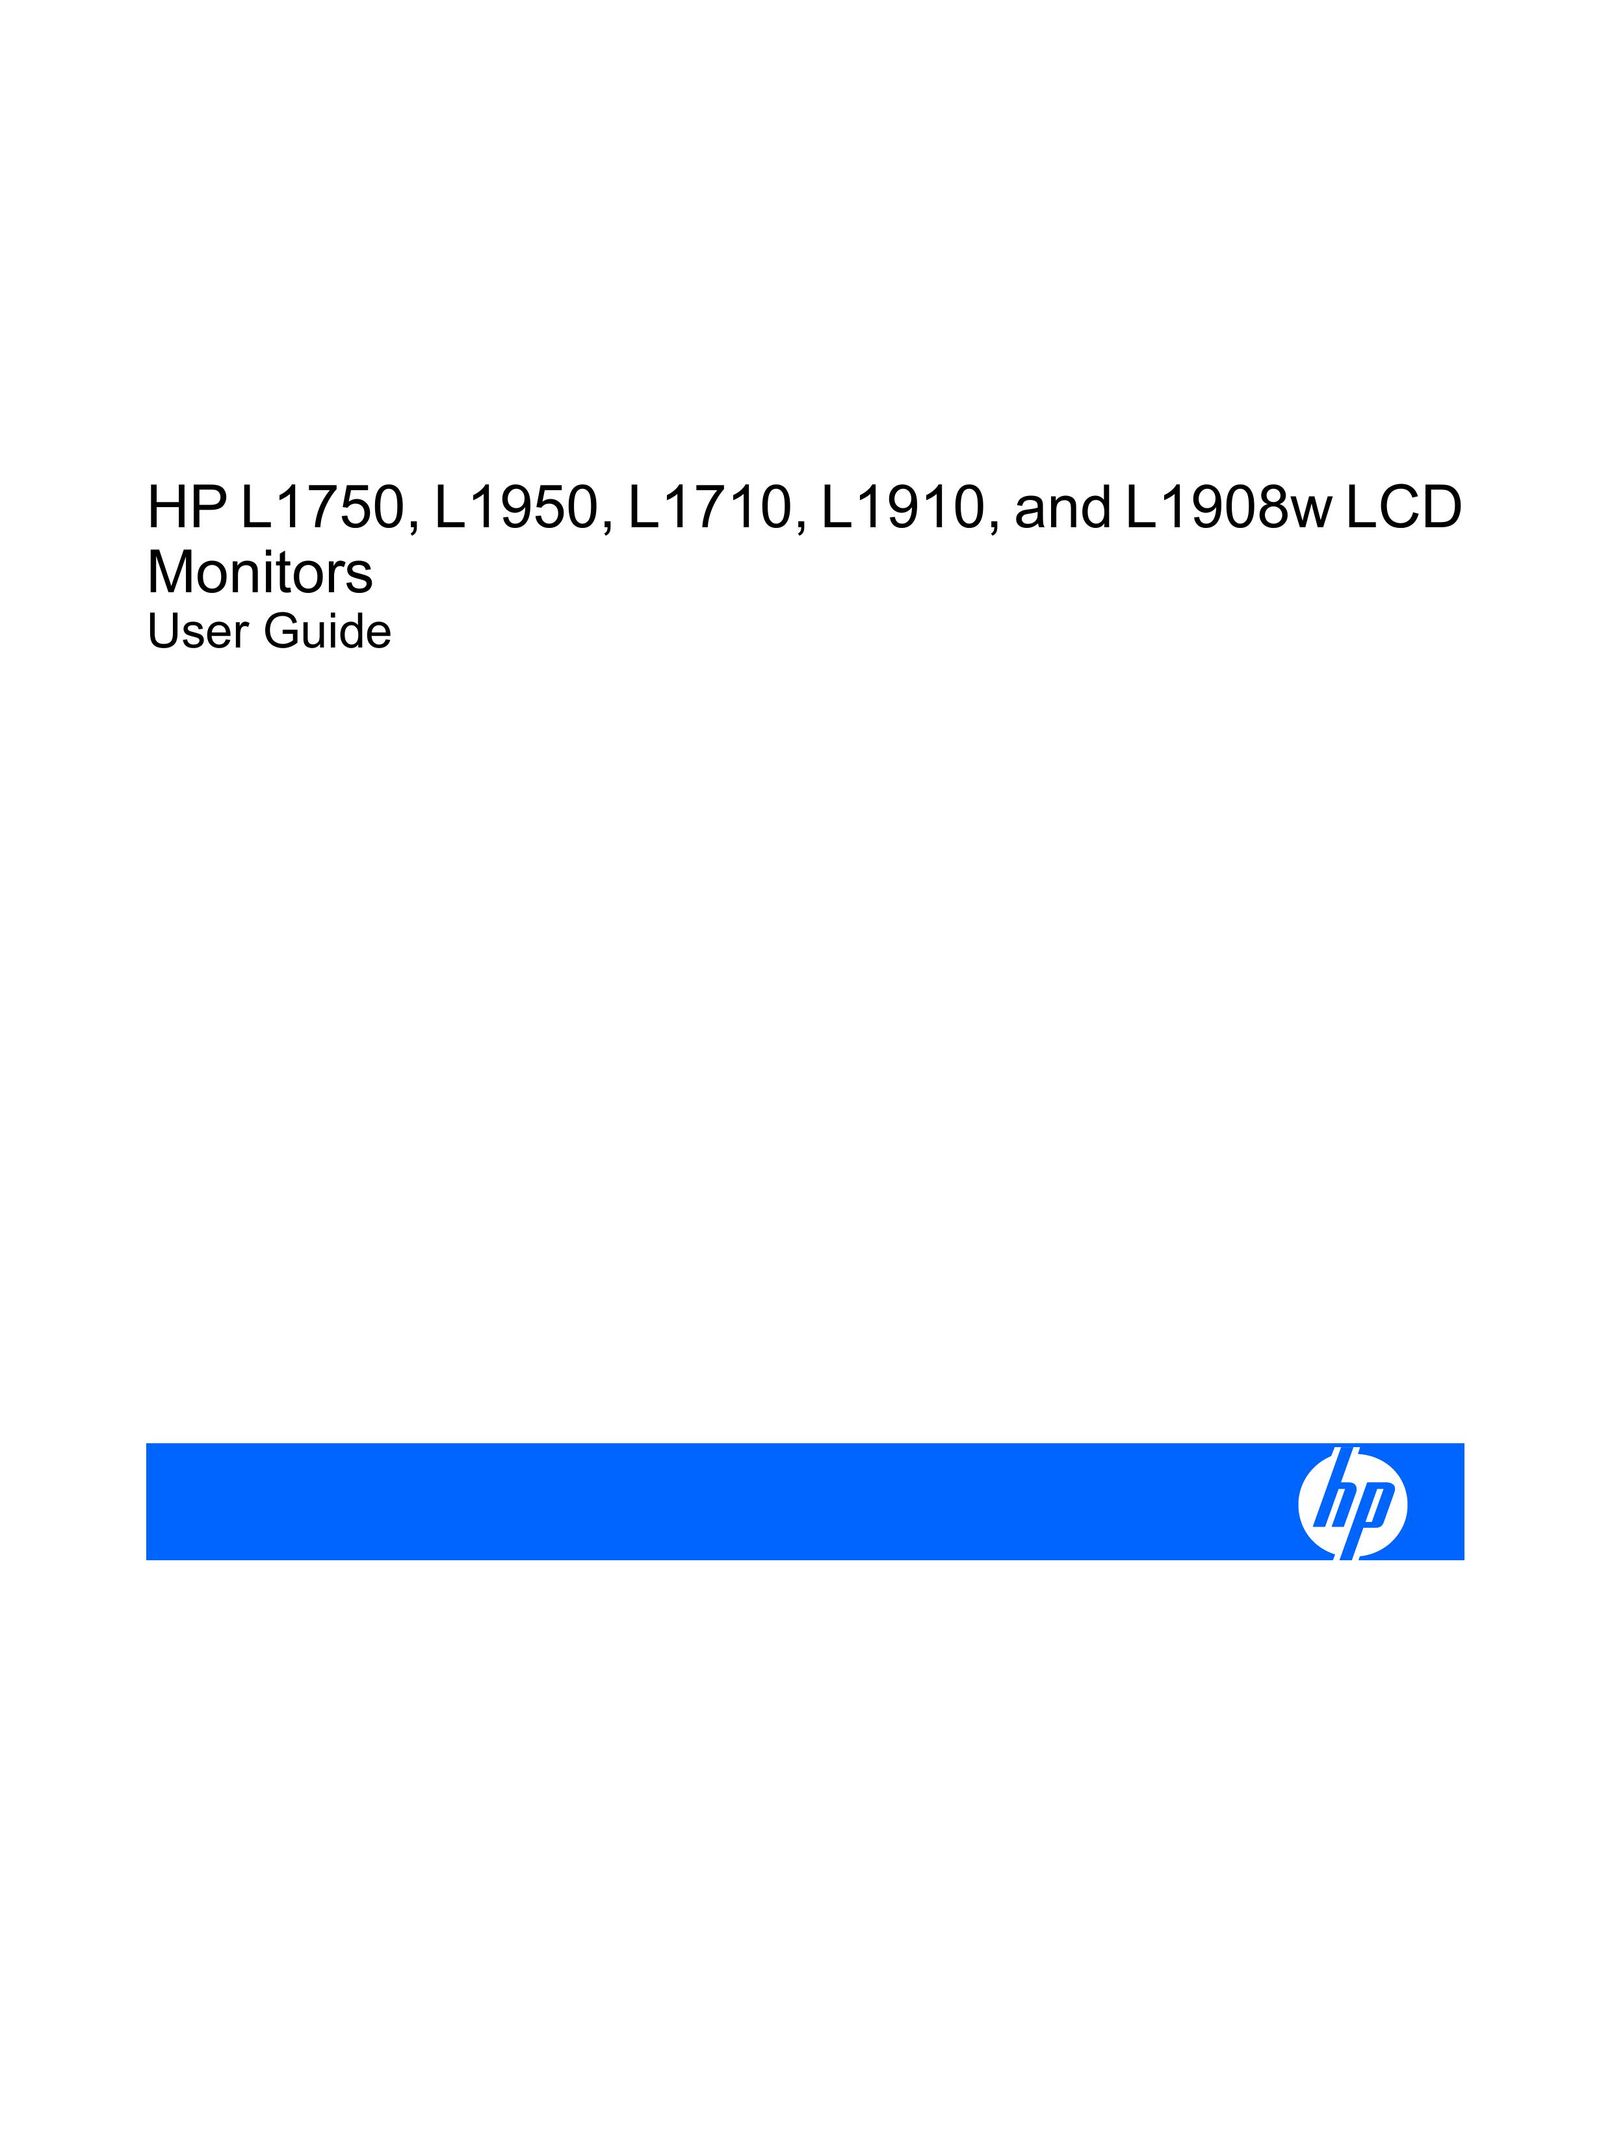 HP (Hewlett-Packard) L1910 Car Video System User Manual